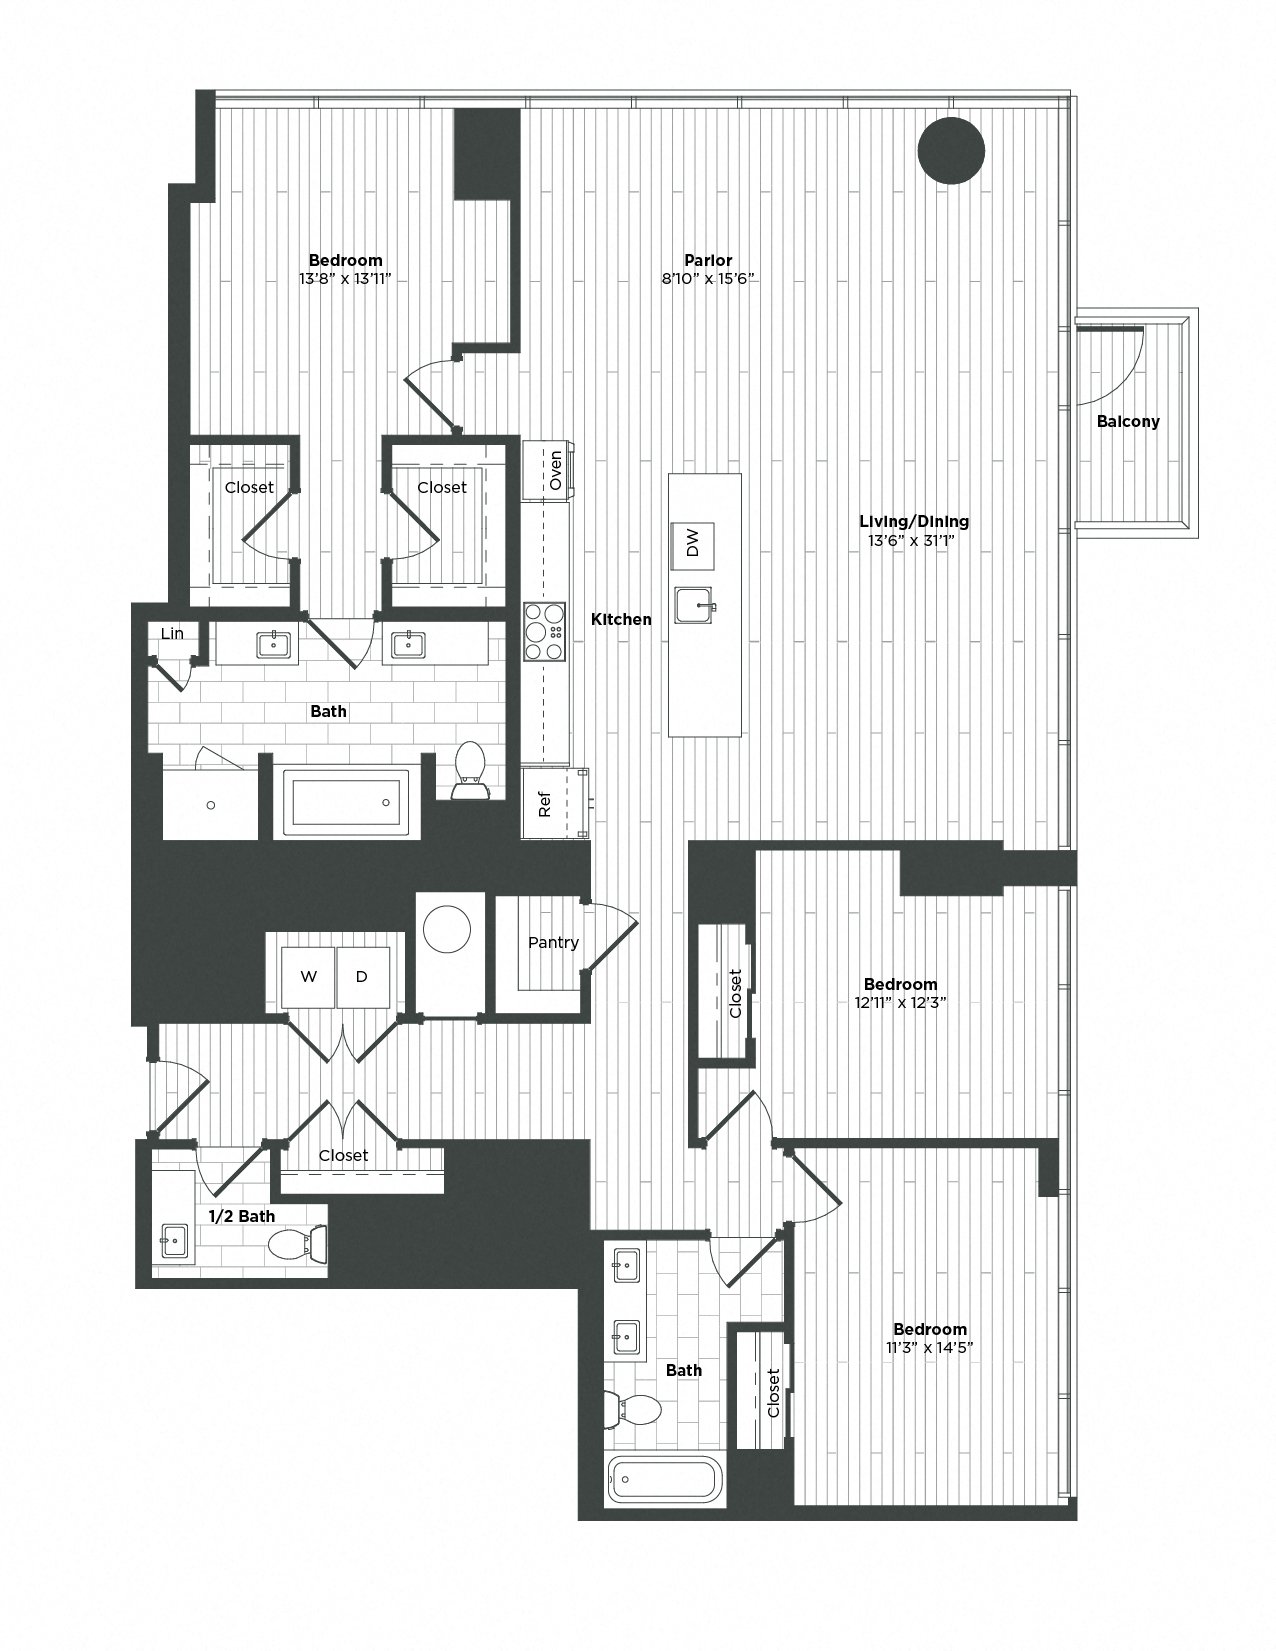 Apartment 3306 floorplan